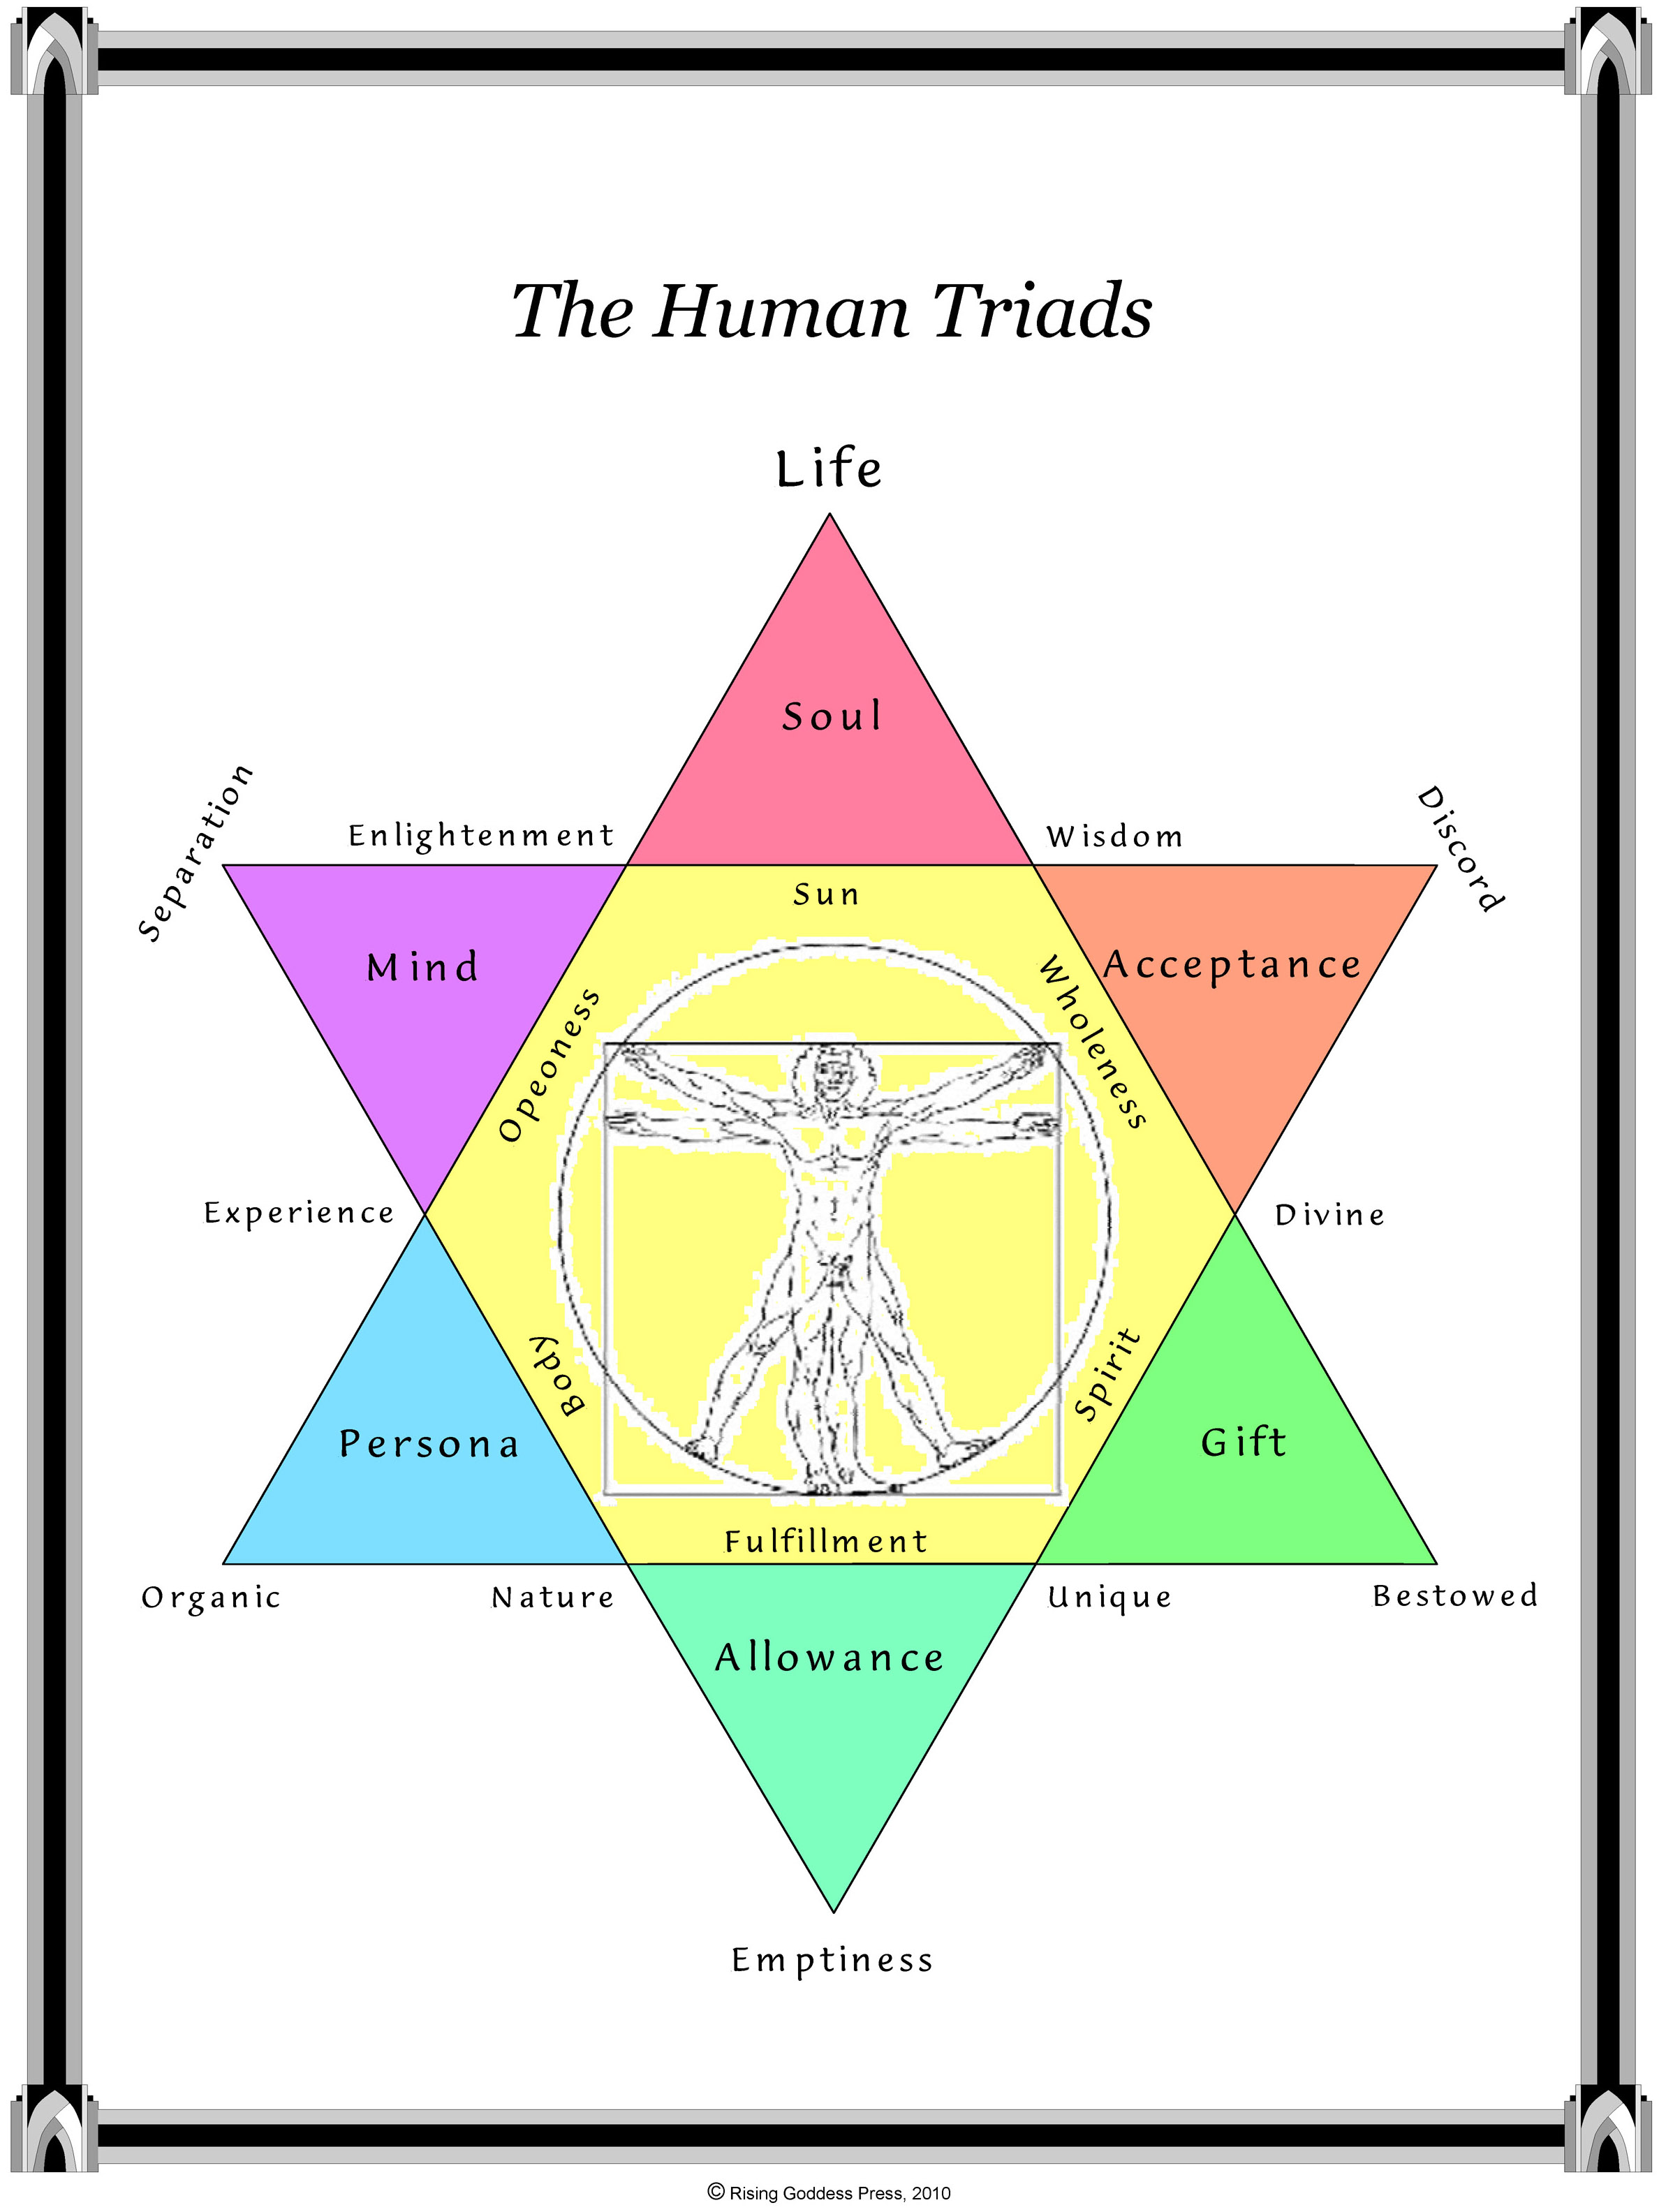 The Human Triads